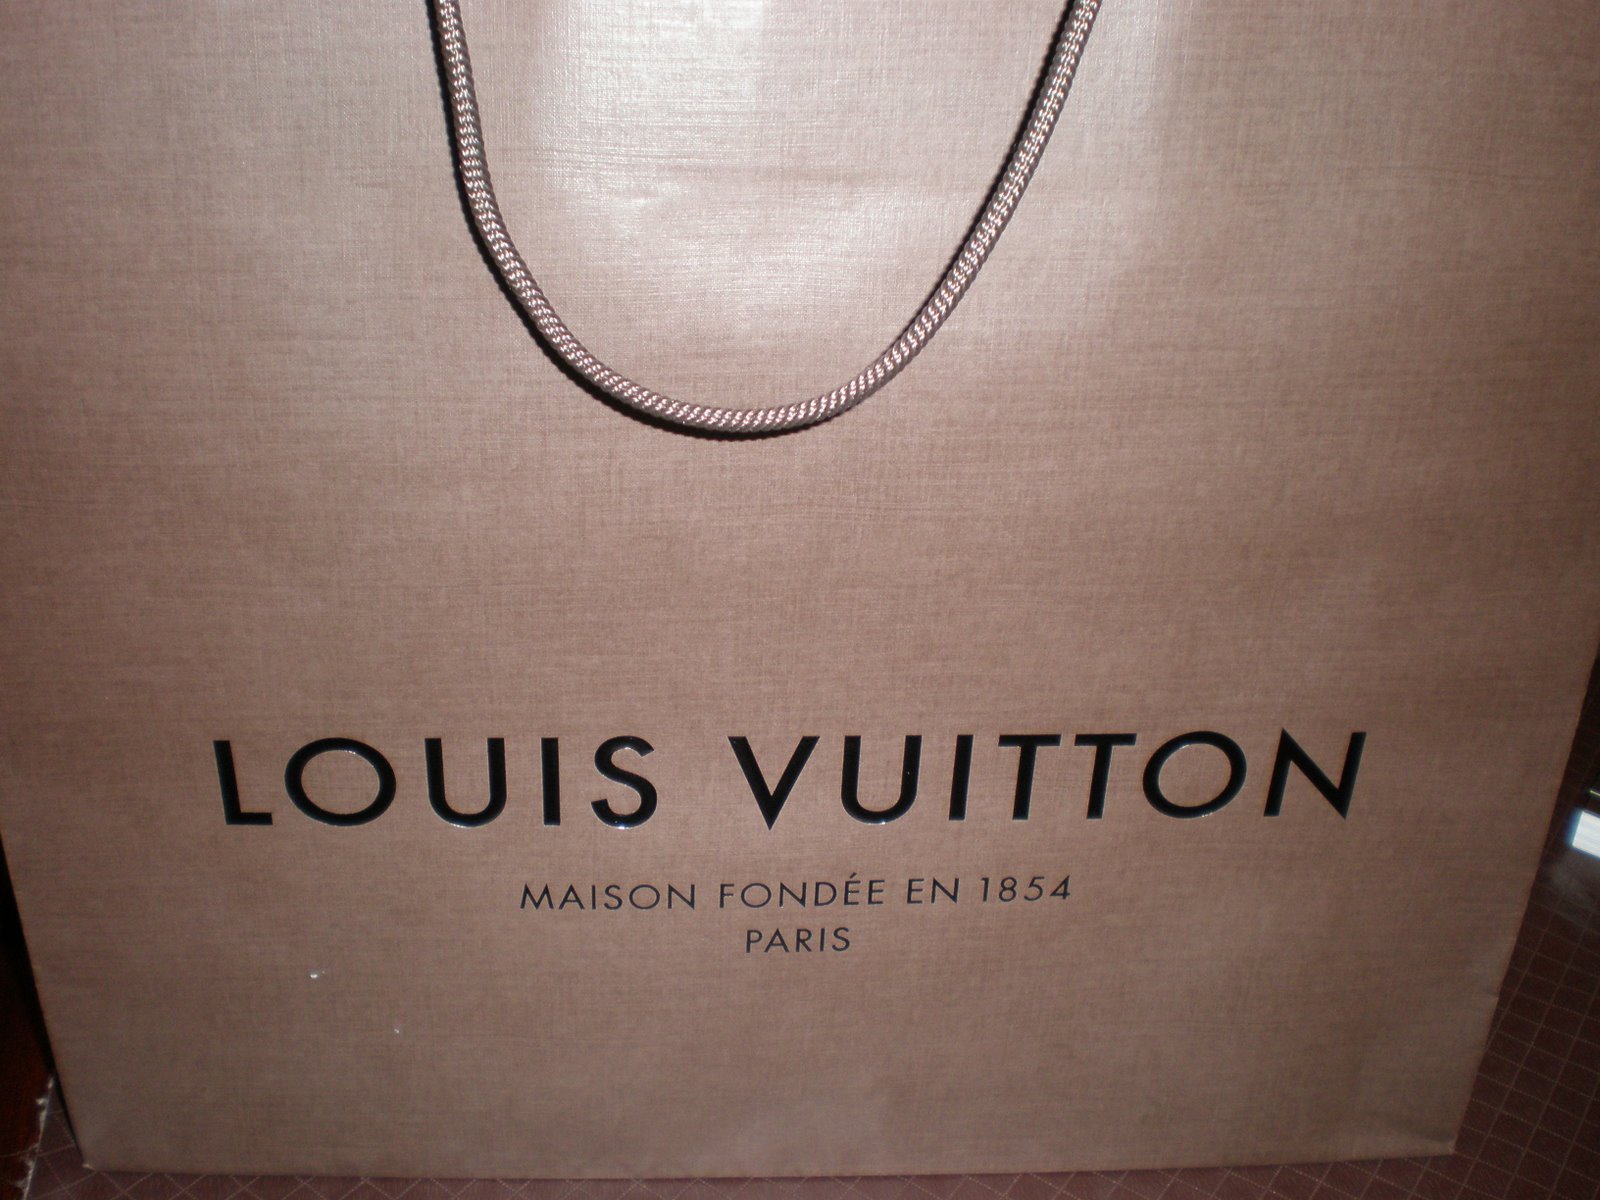 My Louis Vuitton Purchase